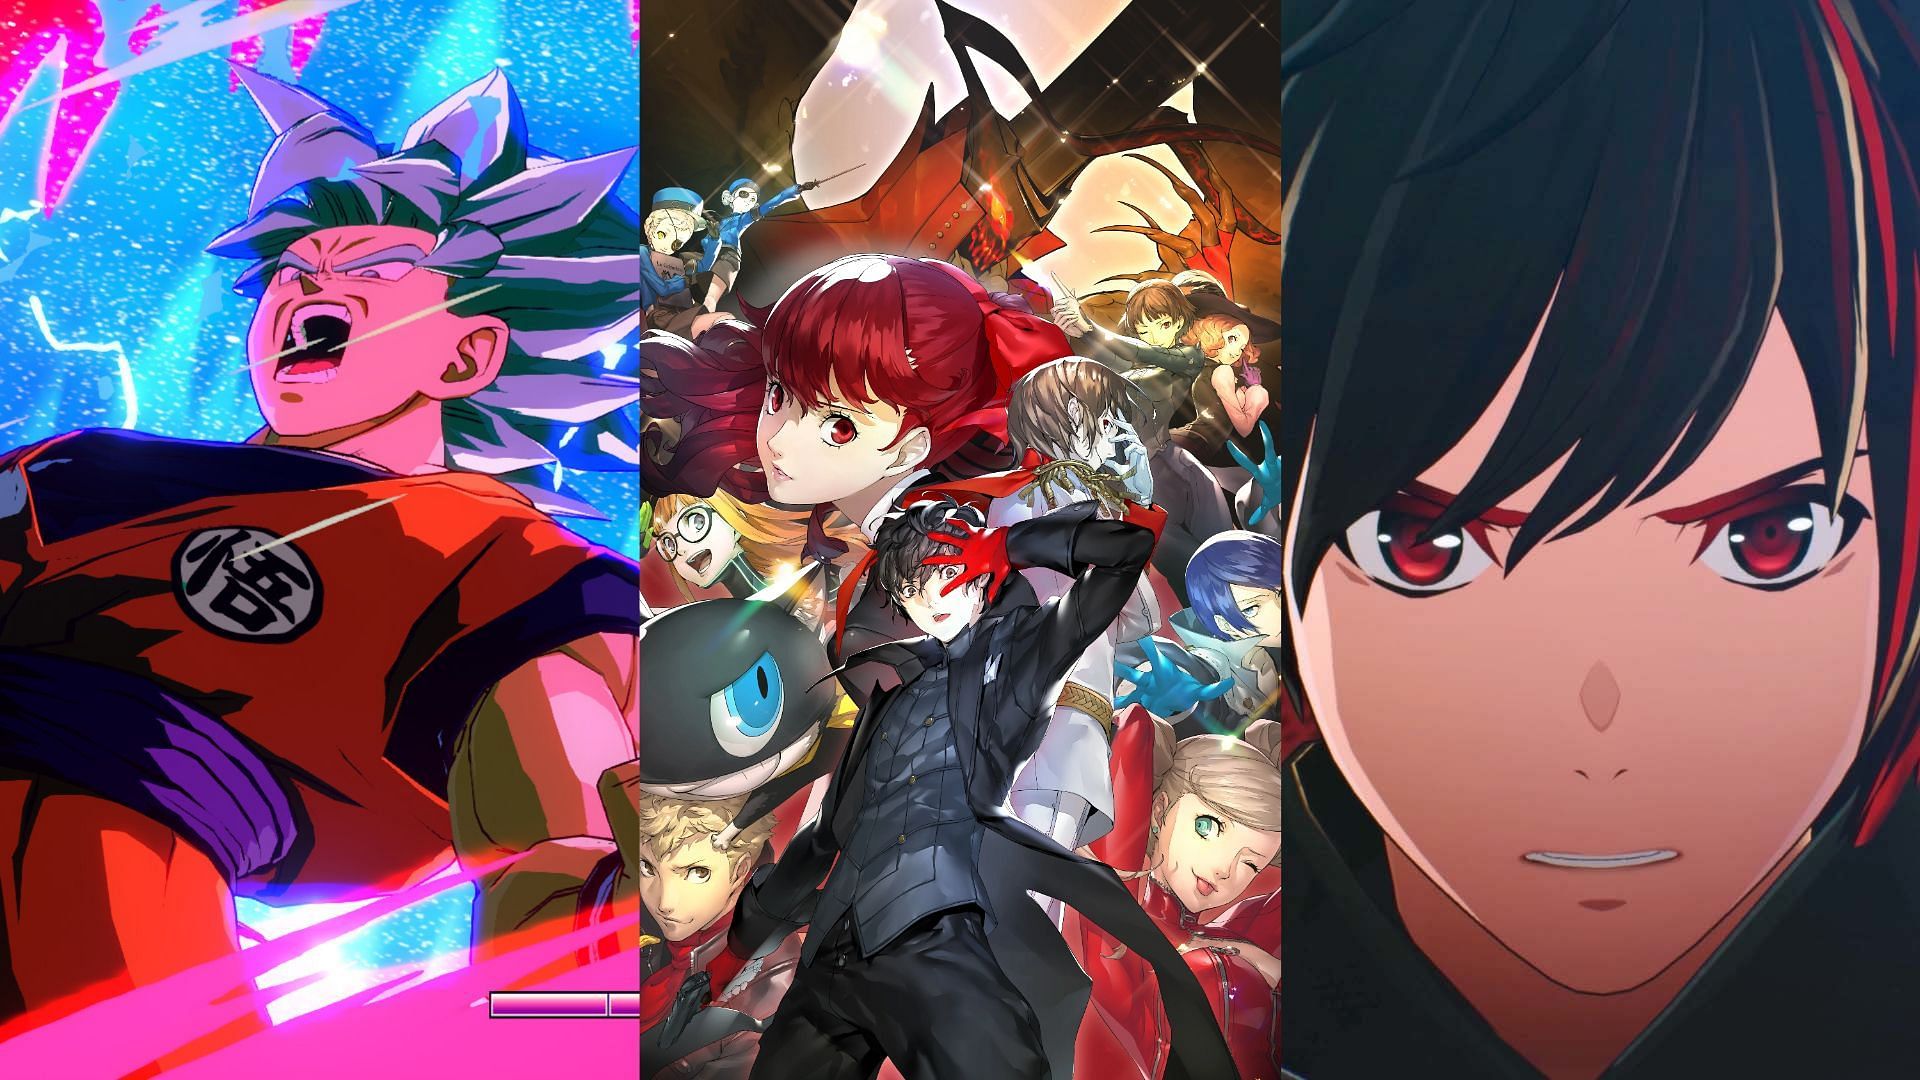 anime: Top 5 anime games on PC